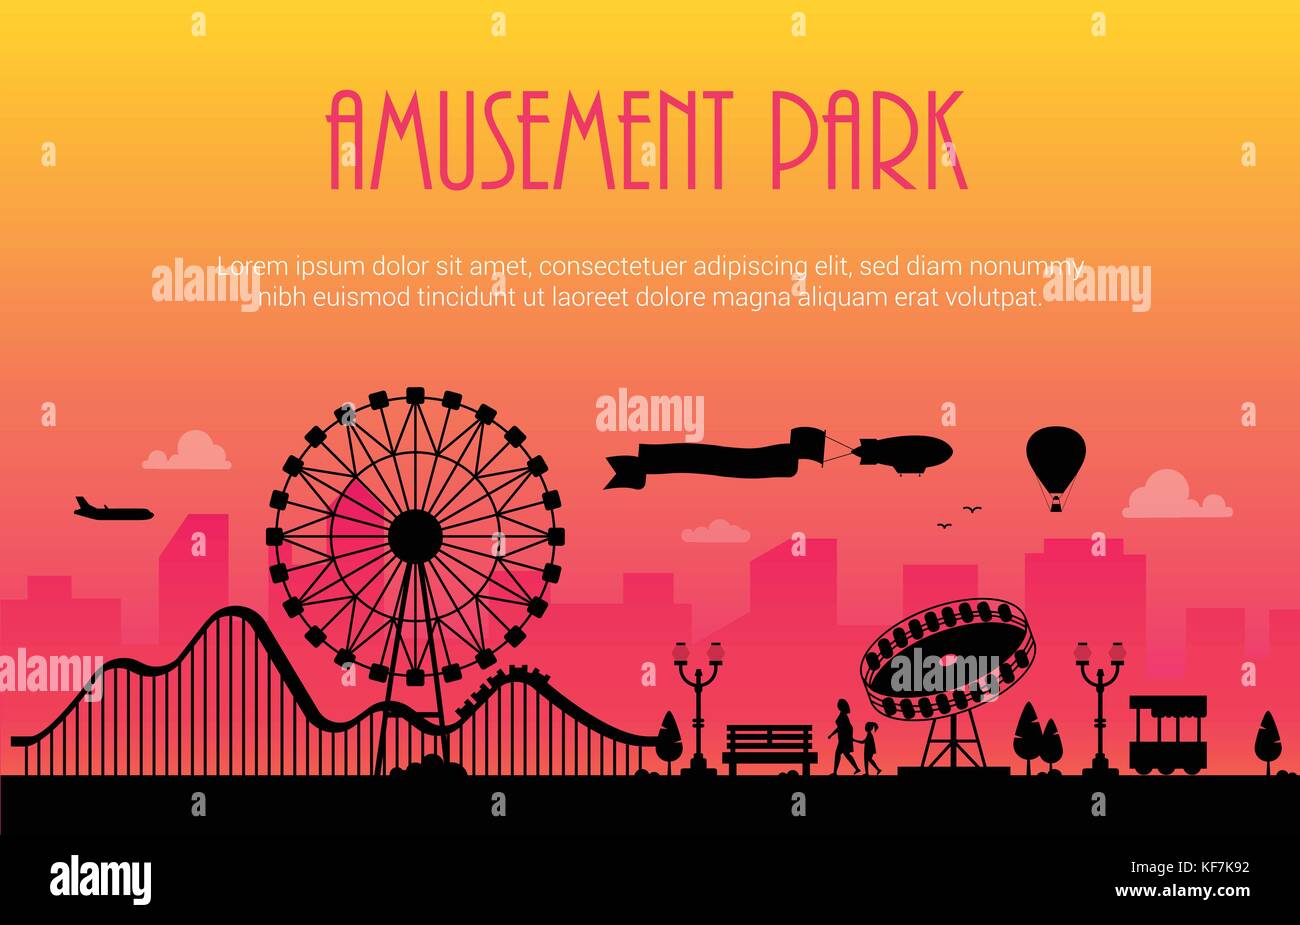 Amusement park - modern vector illustration Stock Vector